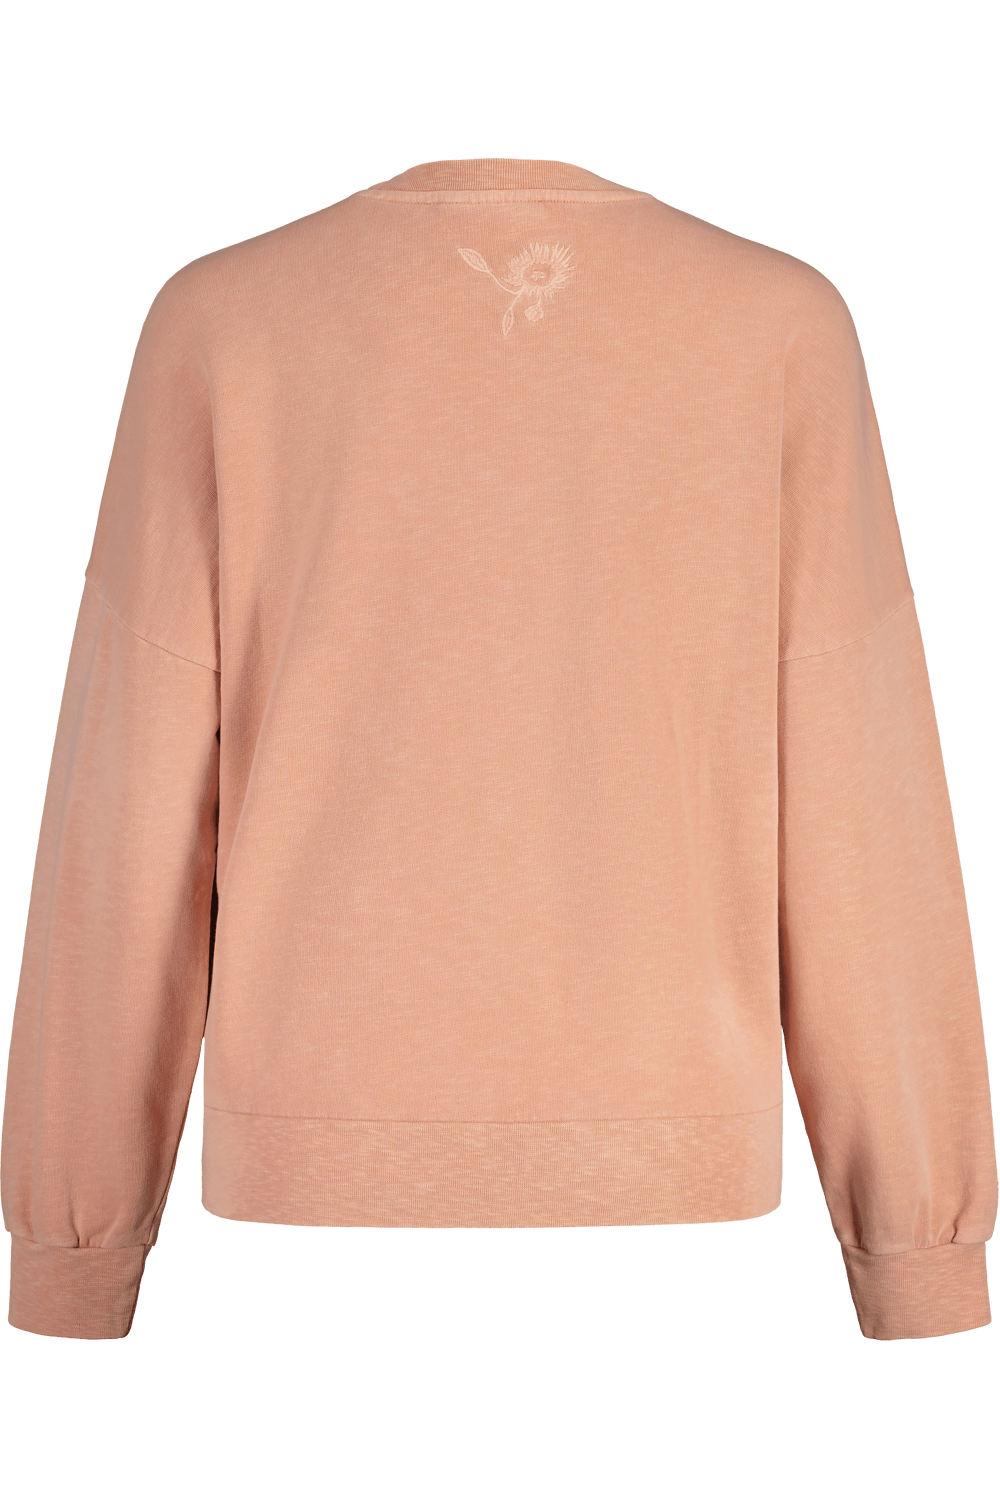 Maloja W's VurzaM. Natural Dye Sweatshirt - 100% Organic Cotton Rosewood Natural Dye Shirt